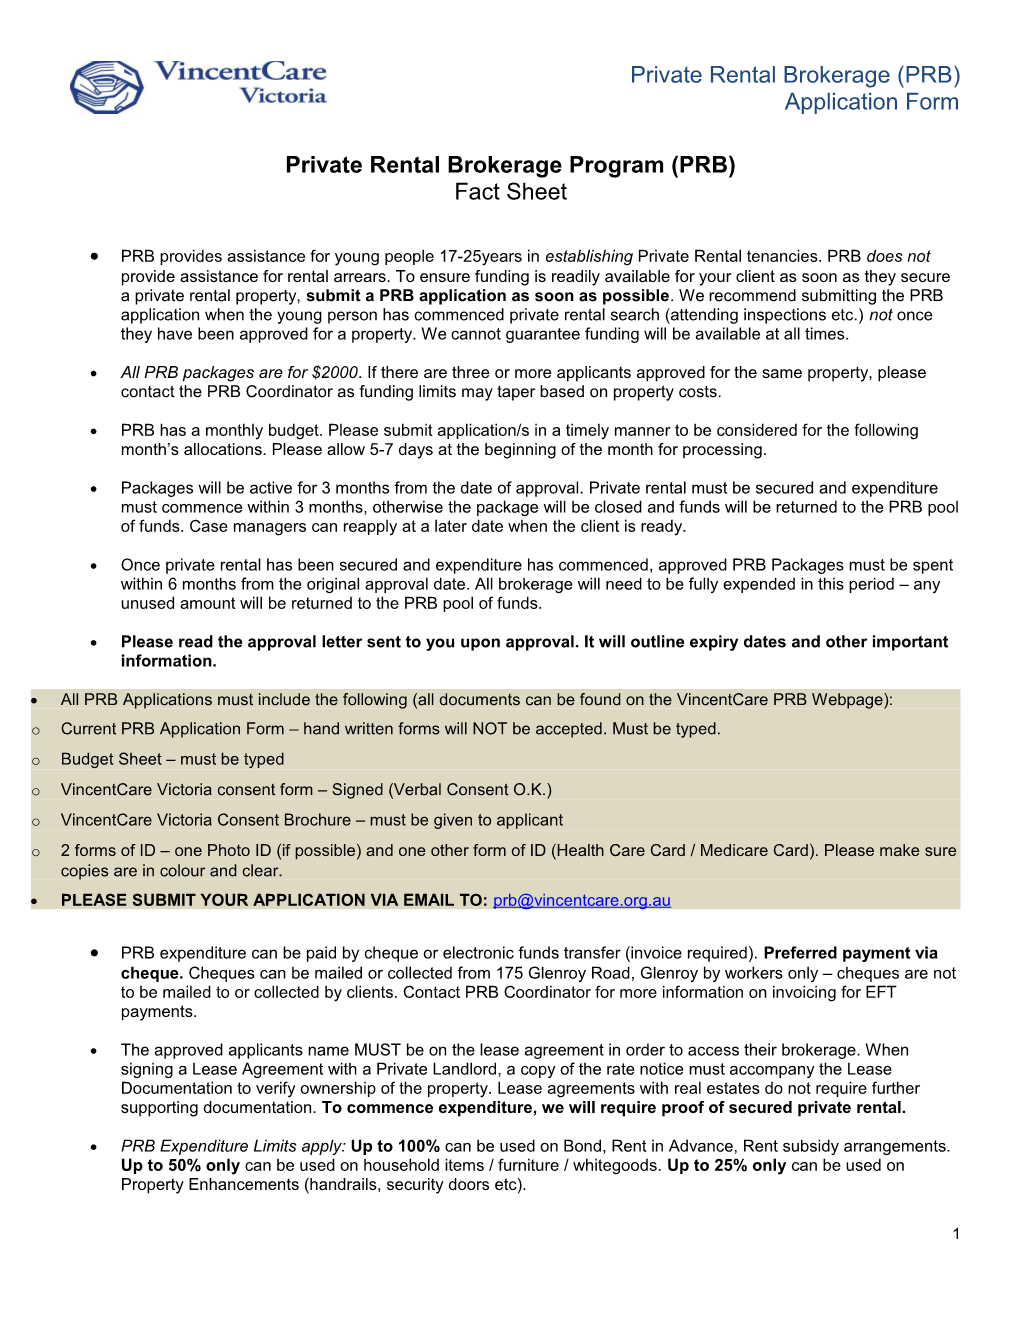 Private Rental Brokerage Program (PRB) Fact Sheet